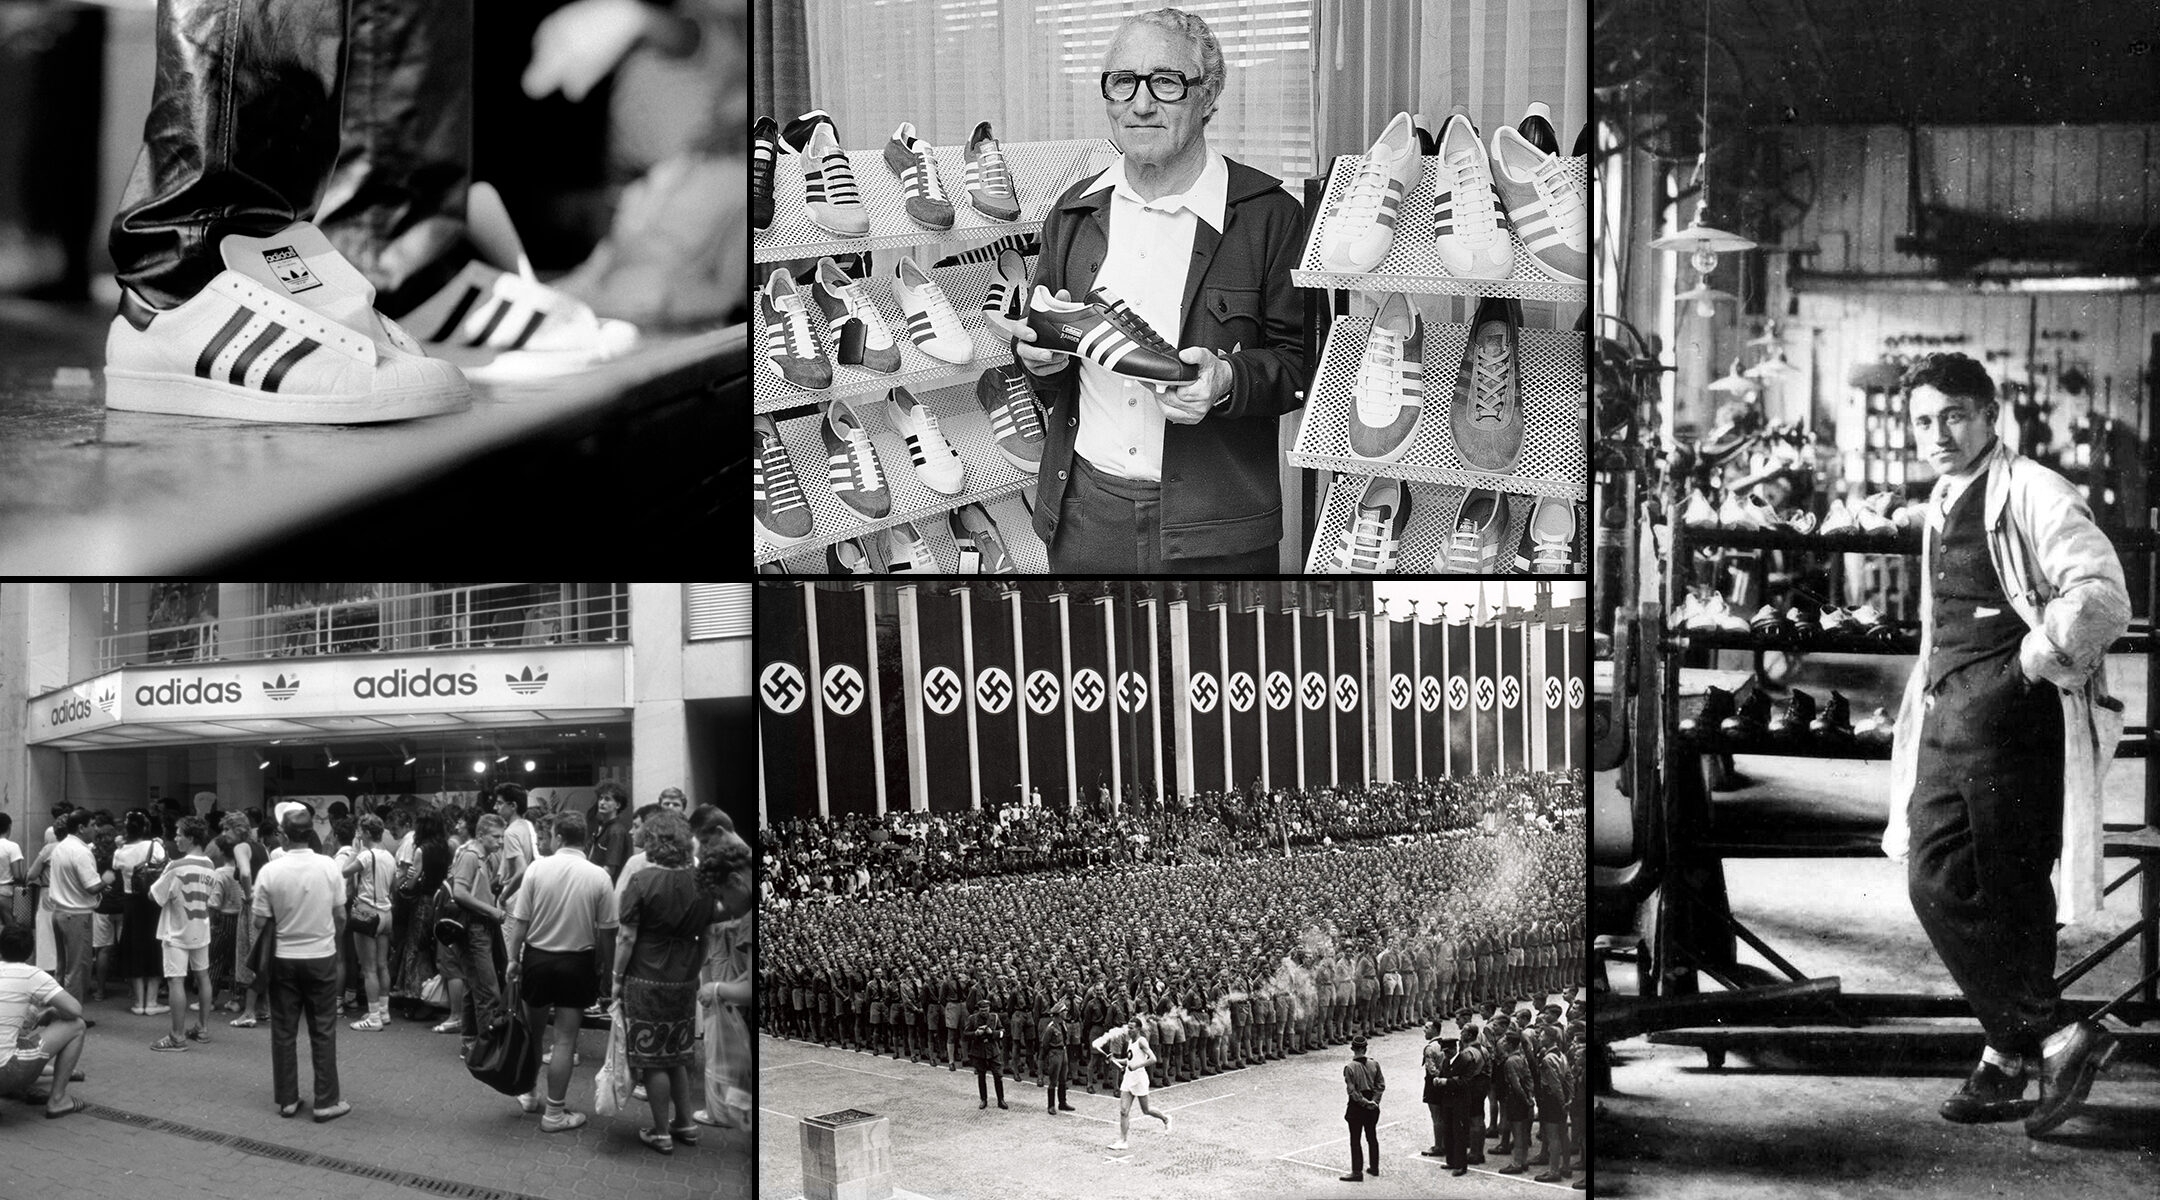 Was Adidas Founder a Nazi?